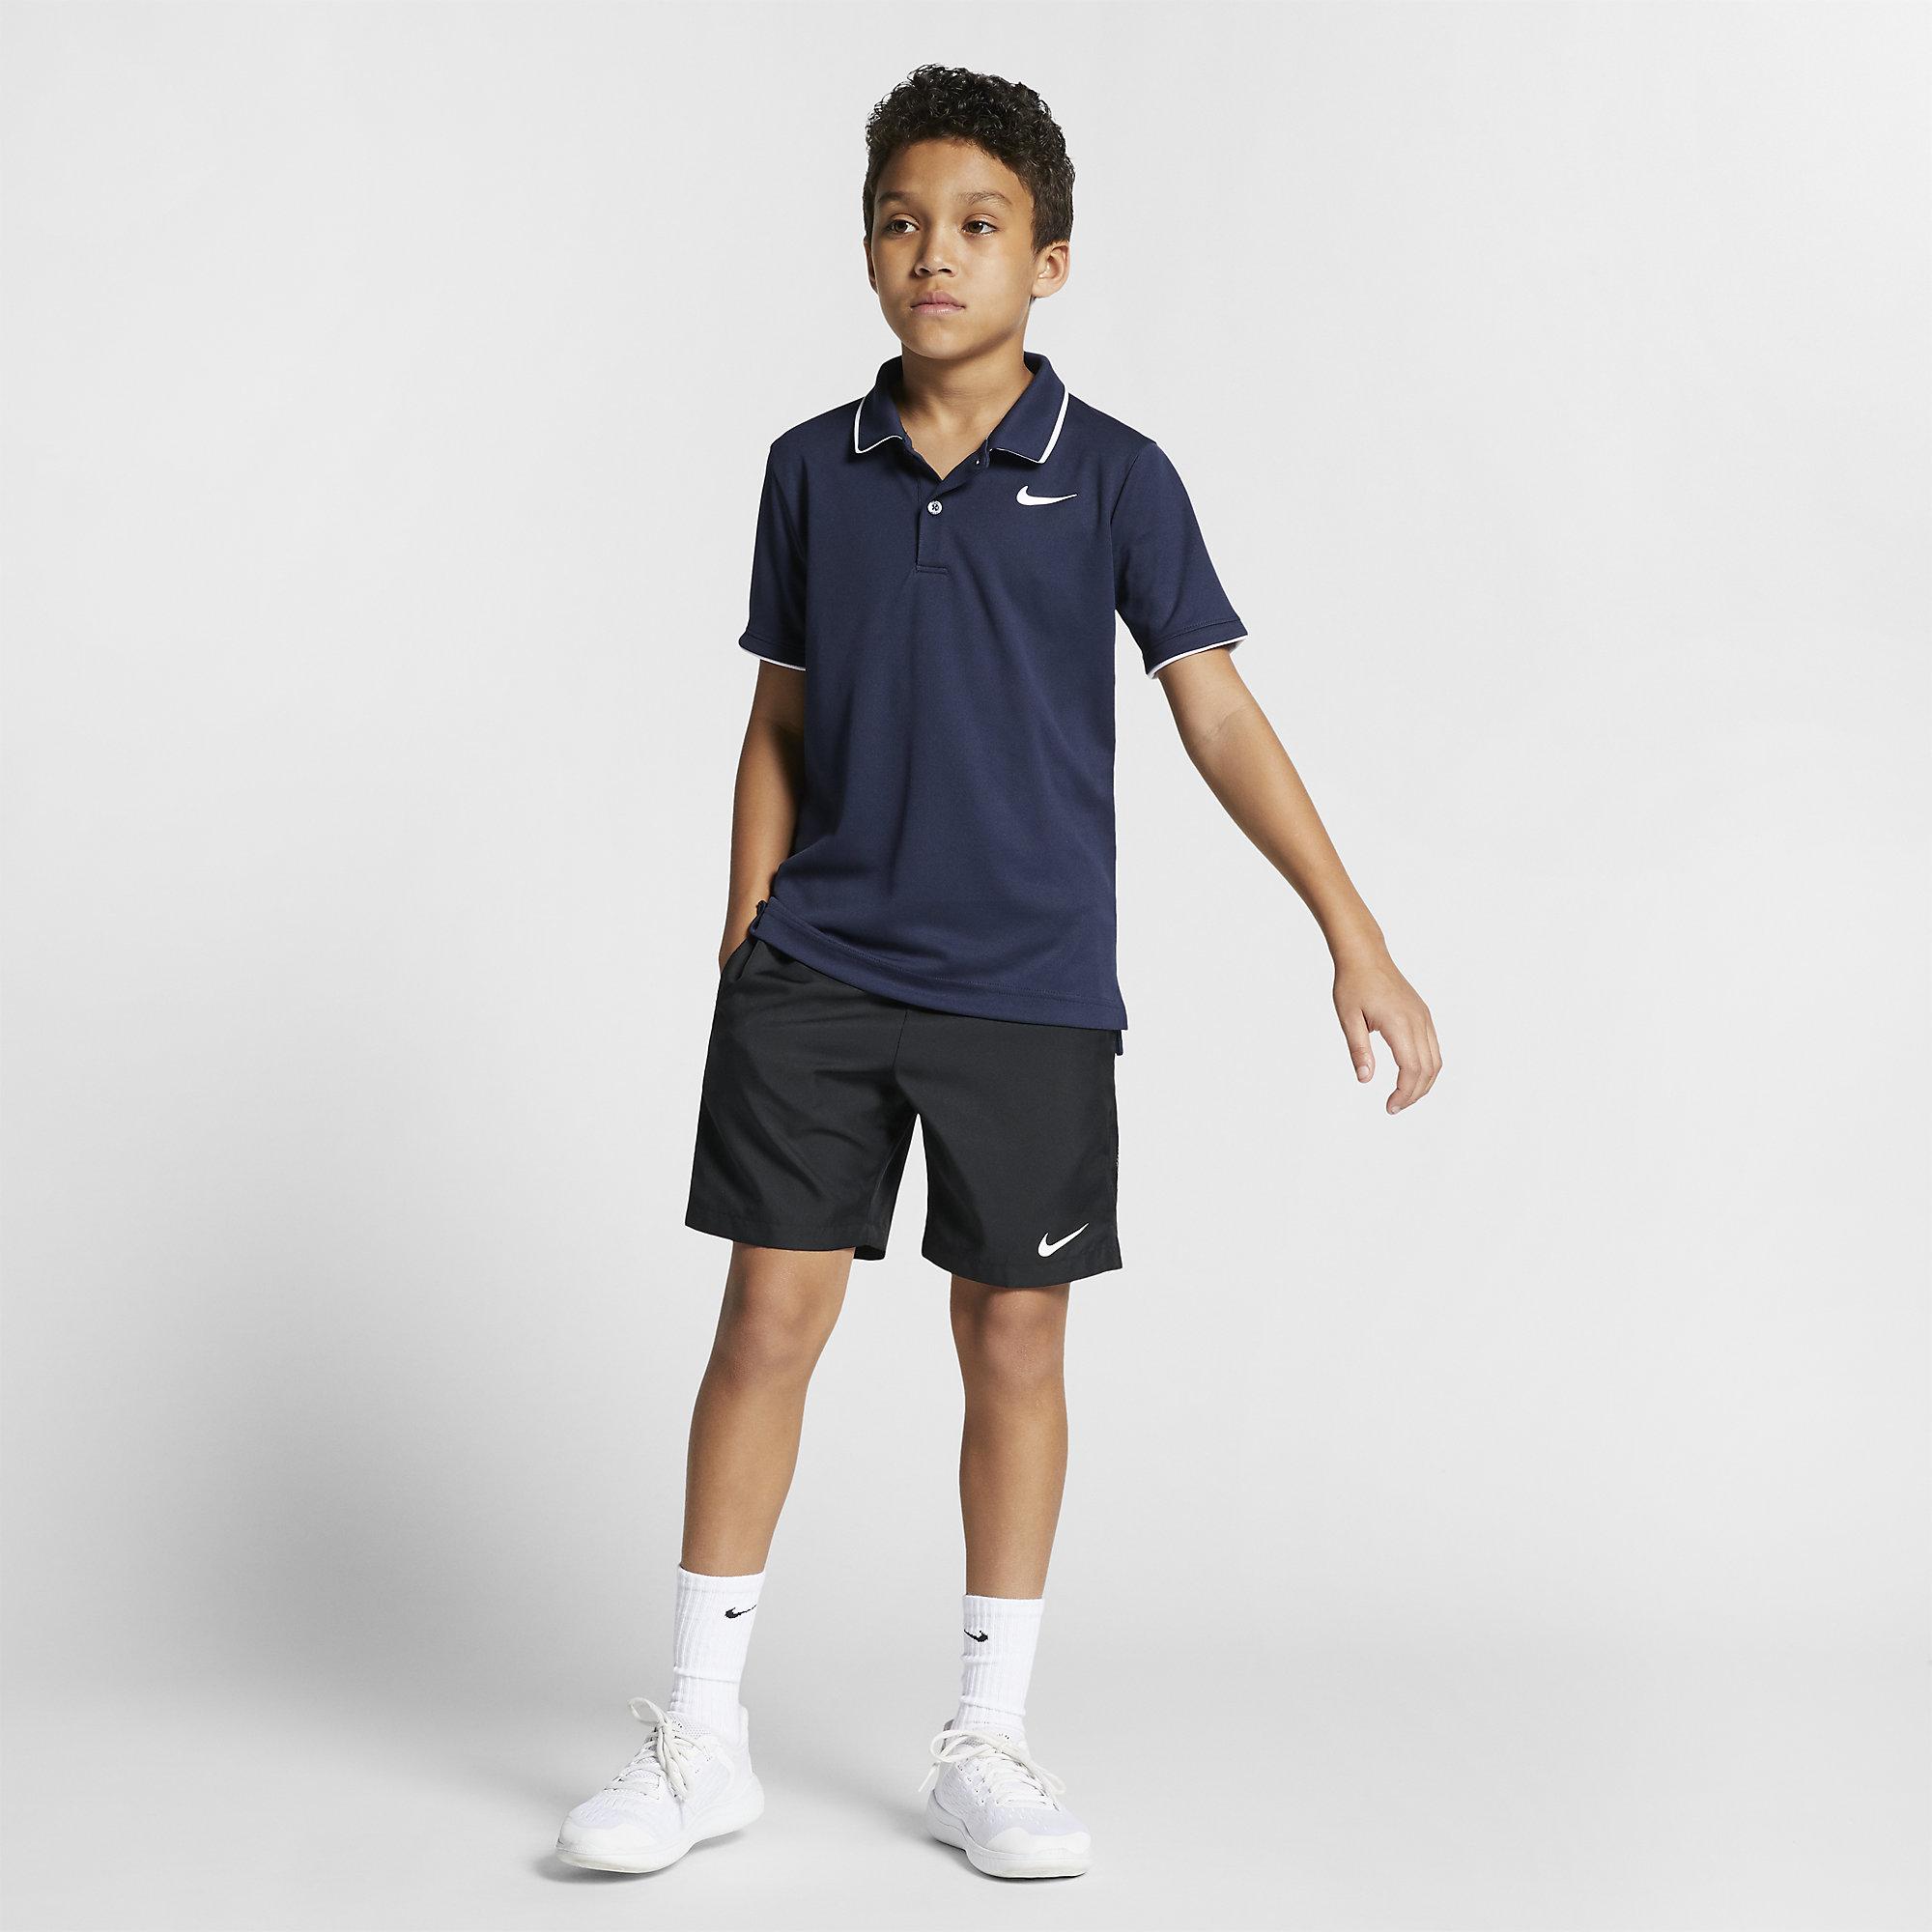 Nike Boys Dri-FIT Tennis Polo - Obsidian/White - Tennisnuts.com